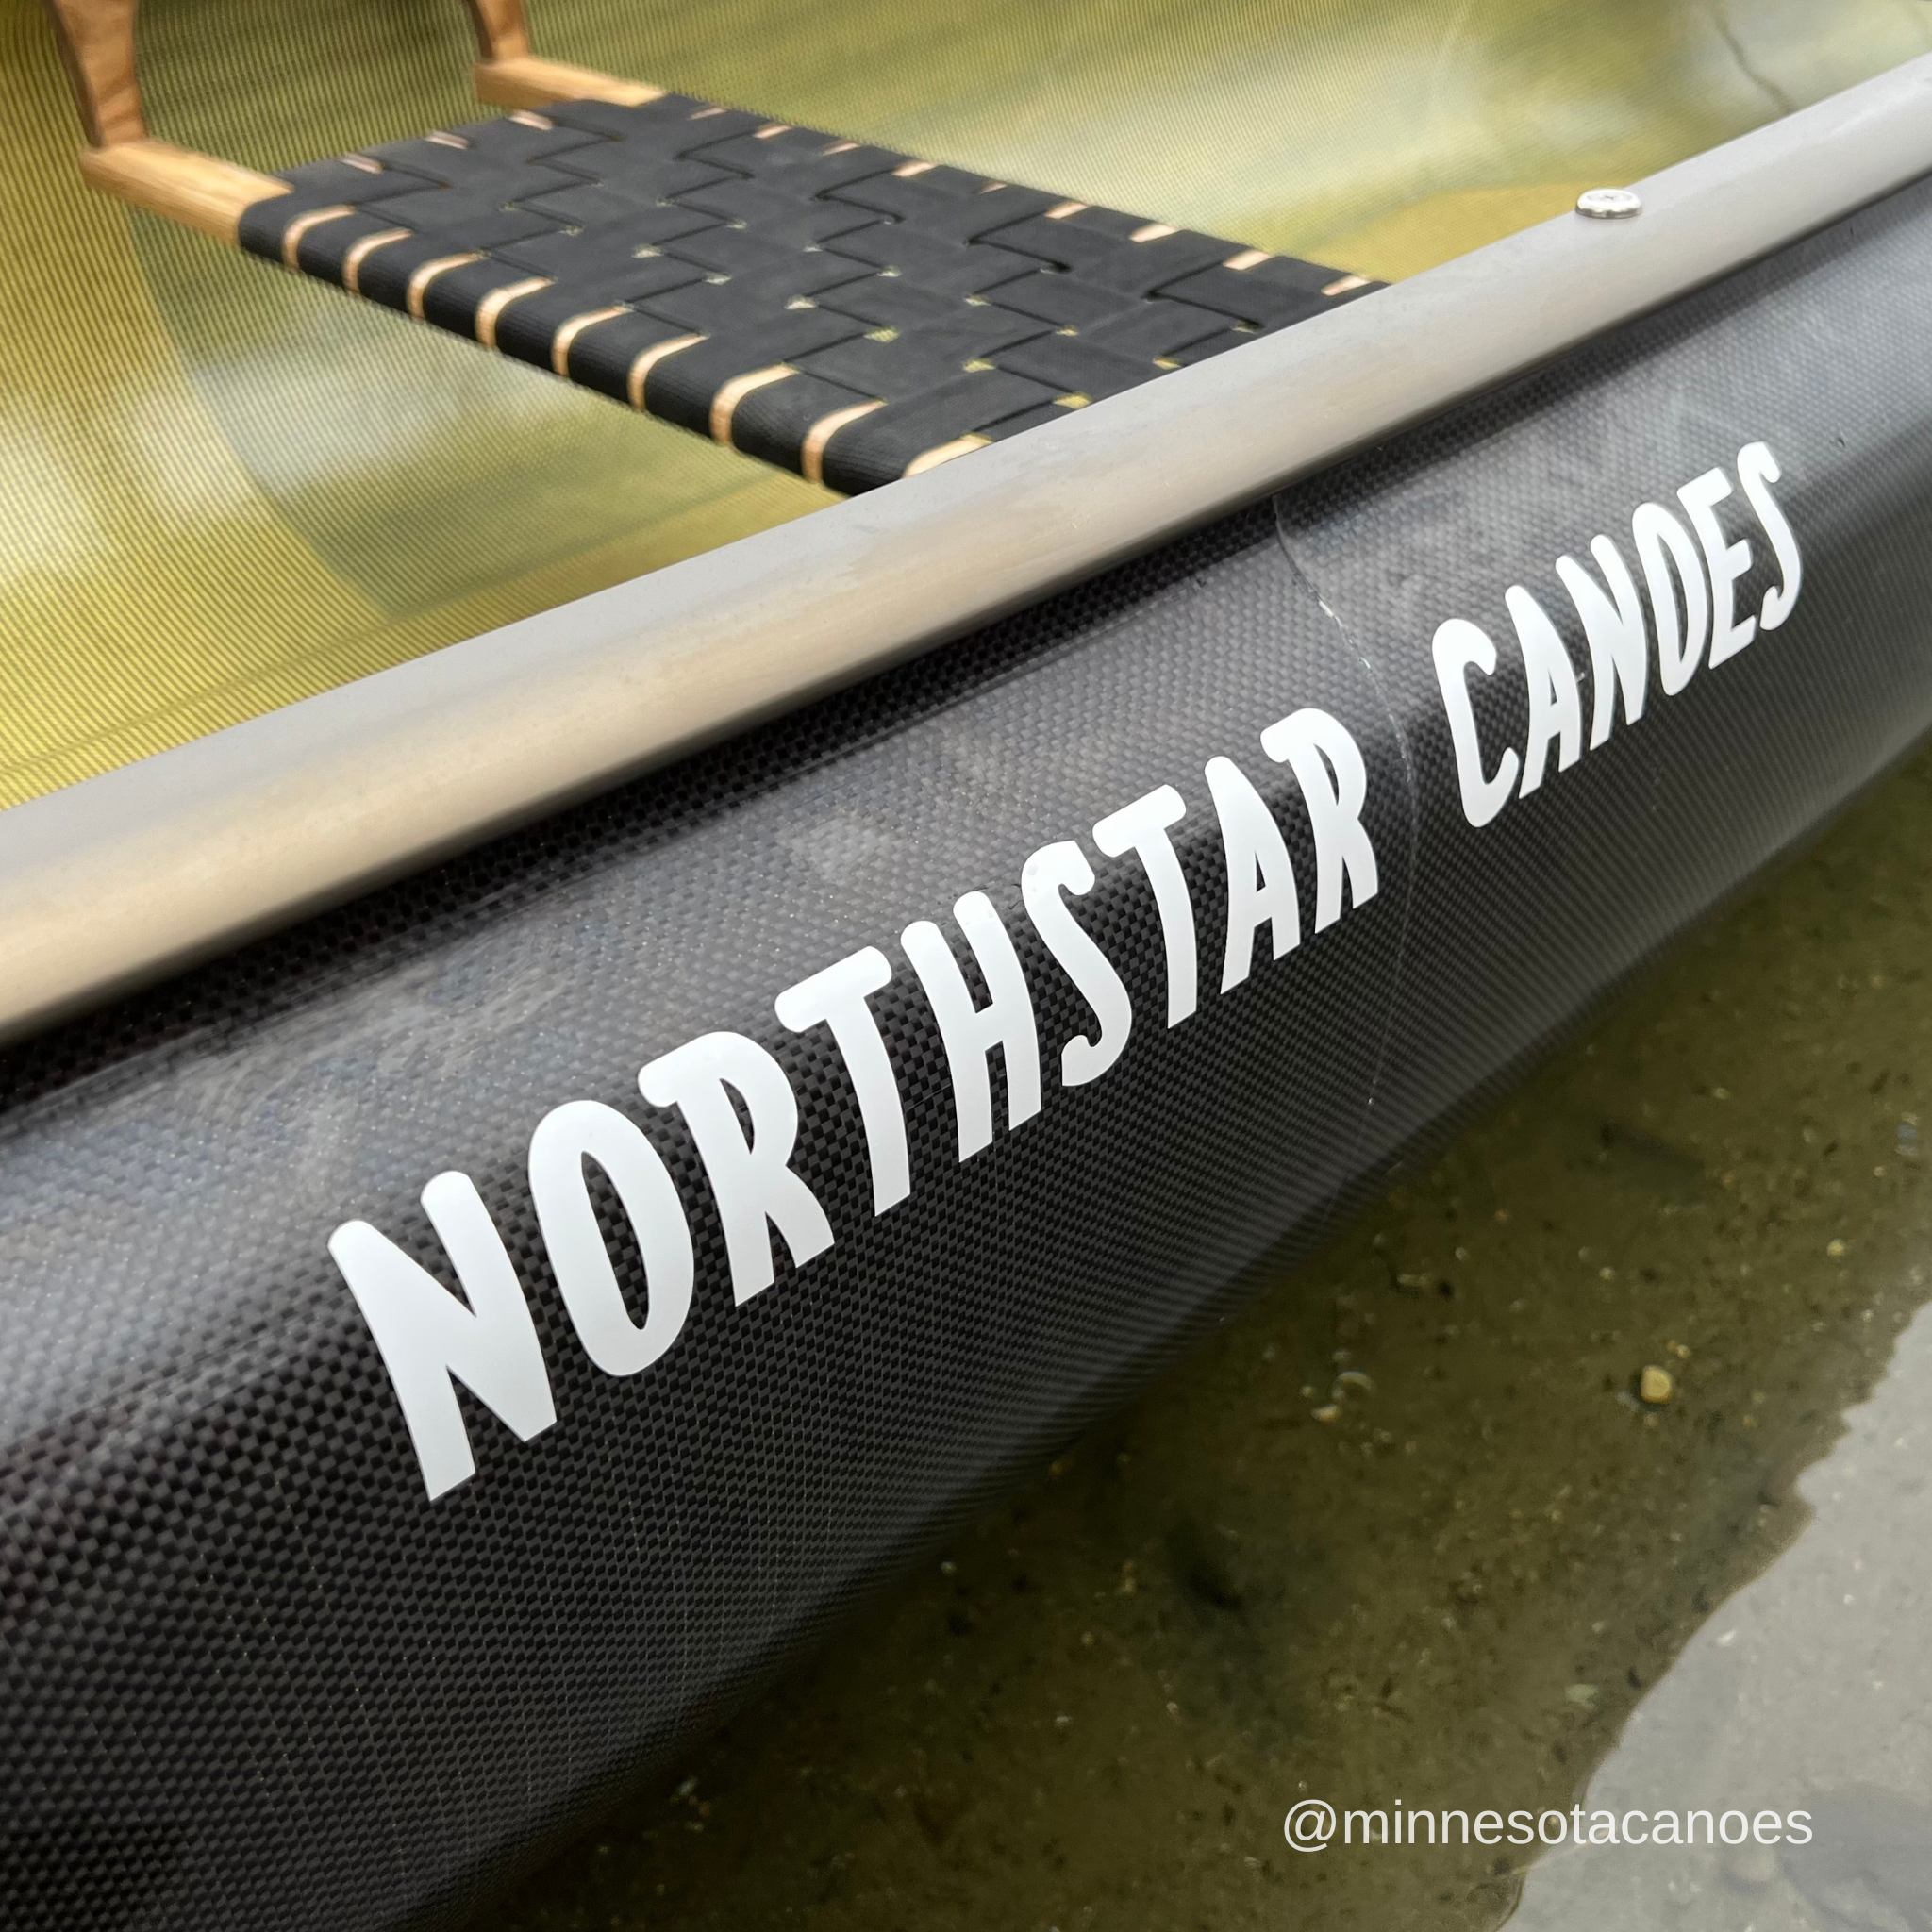 POLARIS (16' 9") BlackLite Tandem Northstar Canoe with 3 Seats